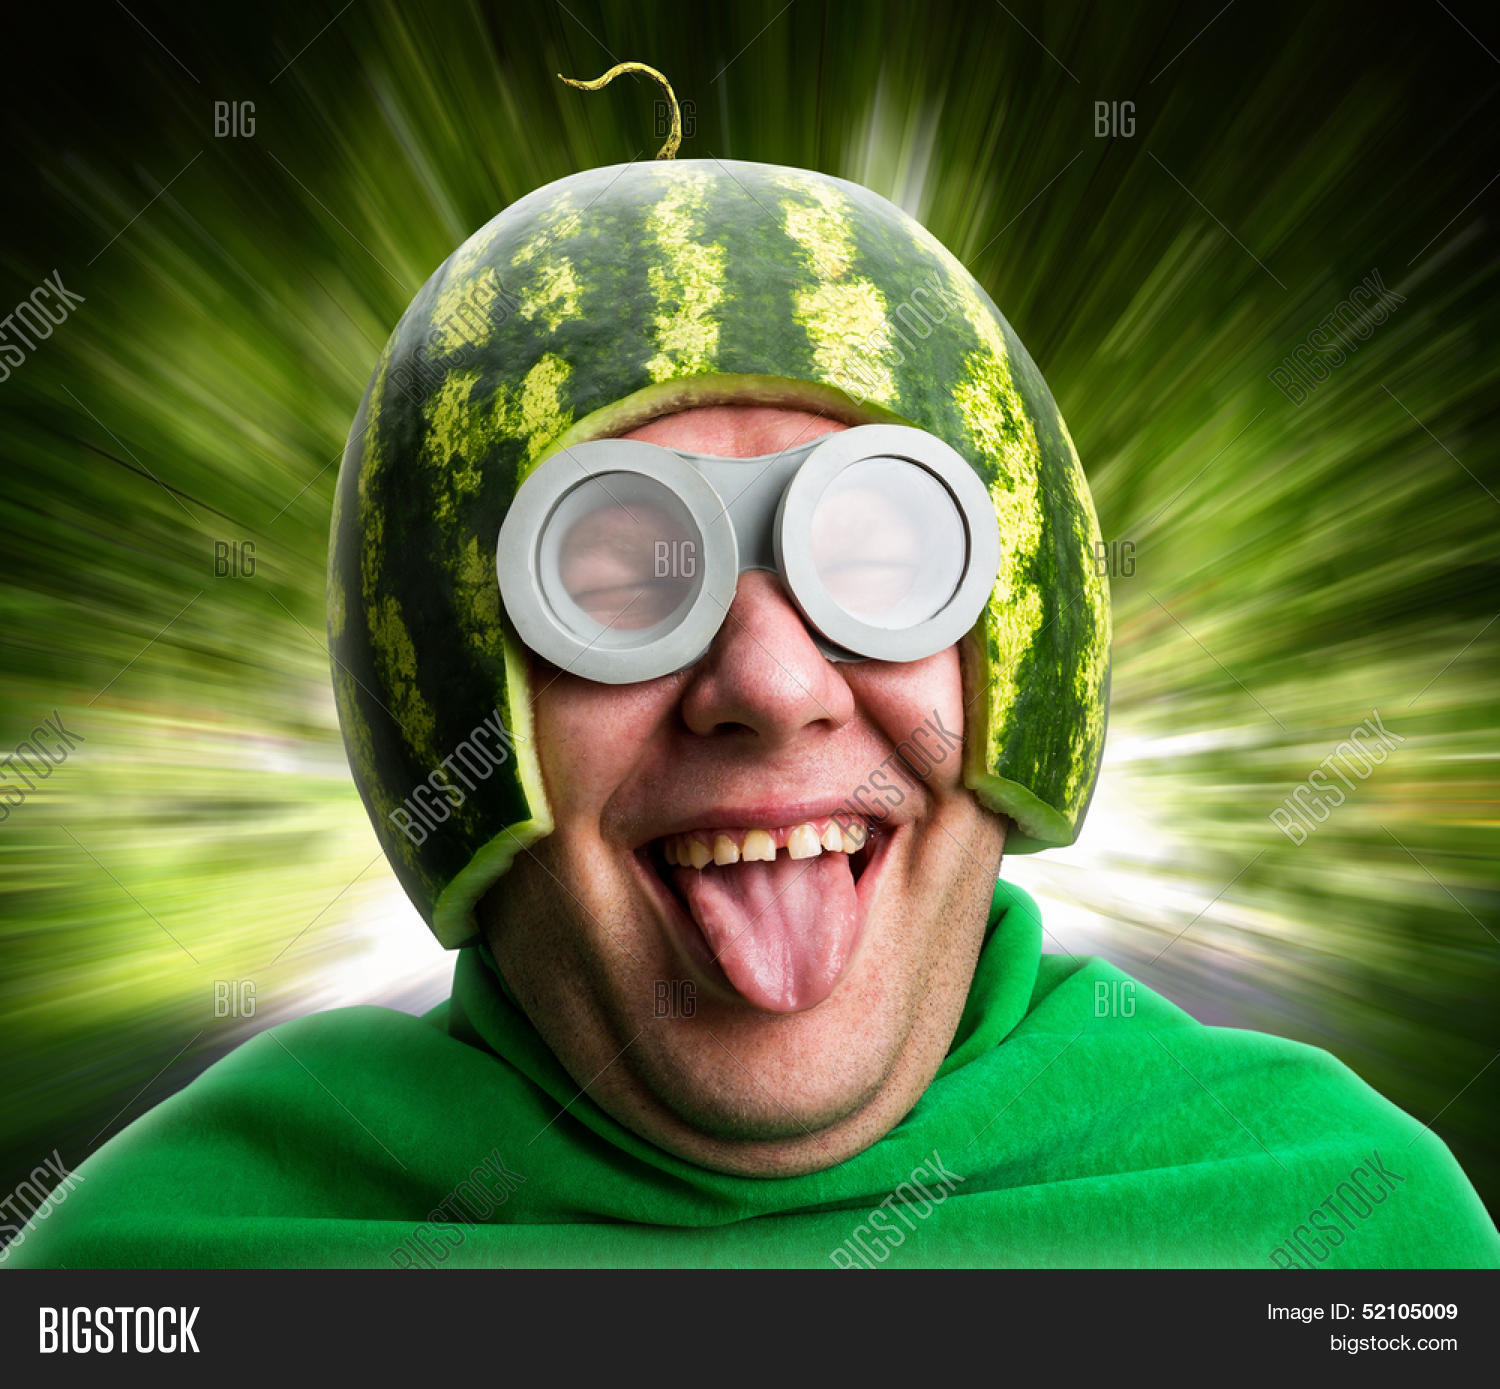 Funny Man Watermelon Helmet Googles Image & Photo | Bigstock